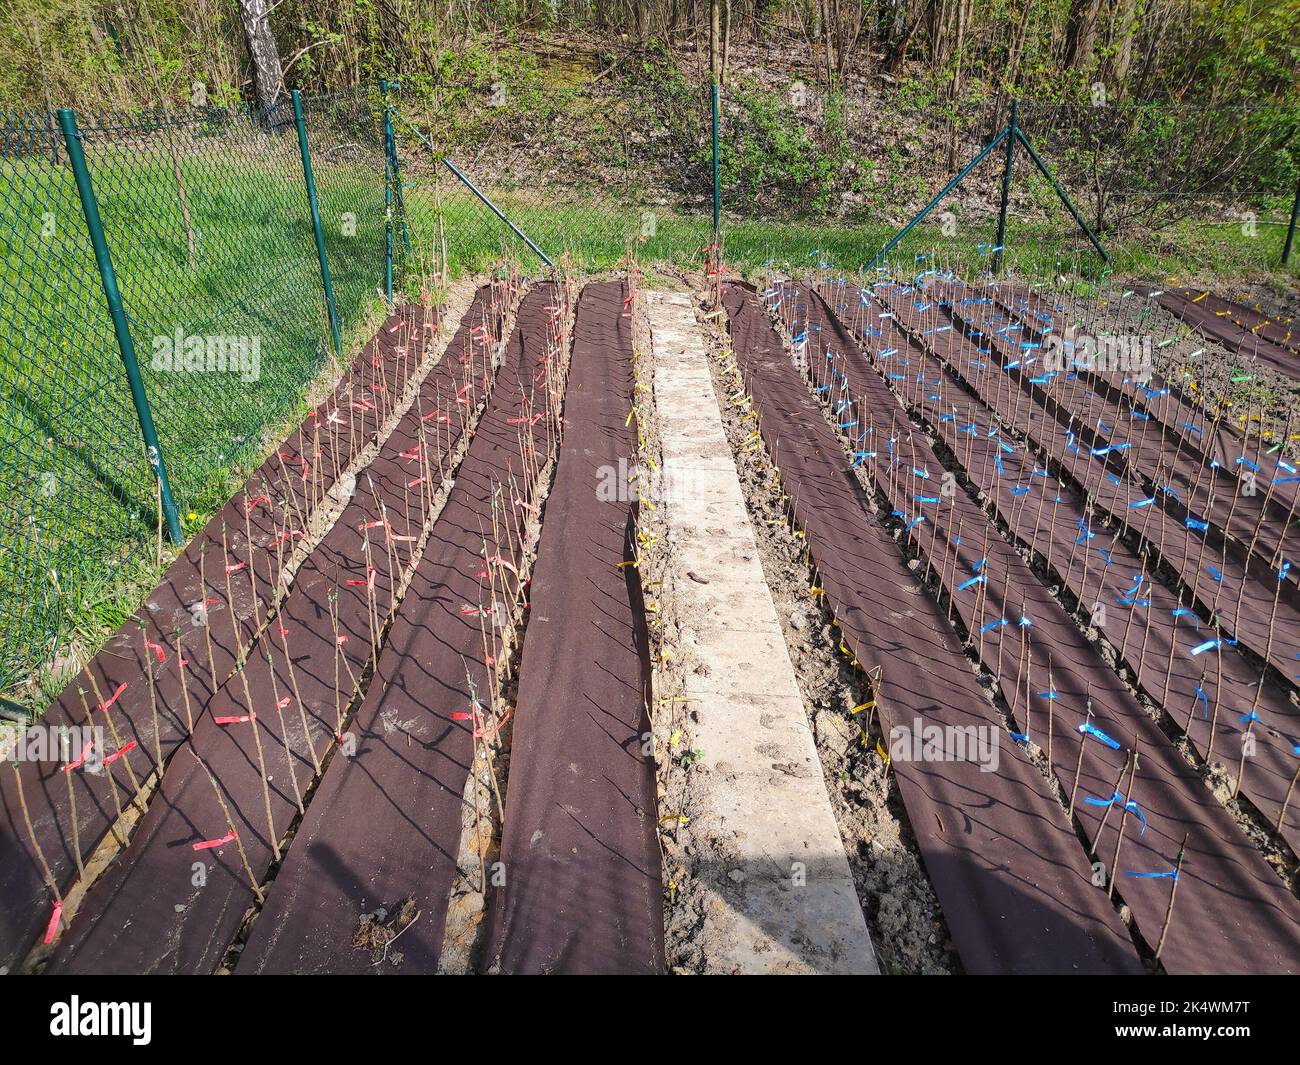 Baumschule für Heidelbeeren in einem umzäunten Garten in Polen. Stockfoto